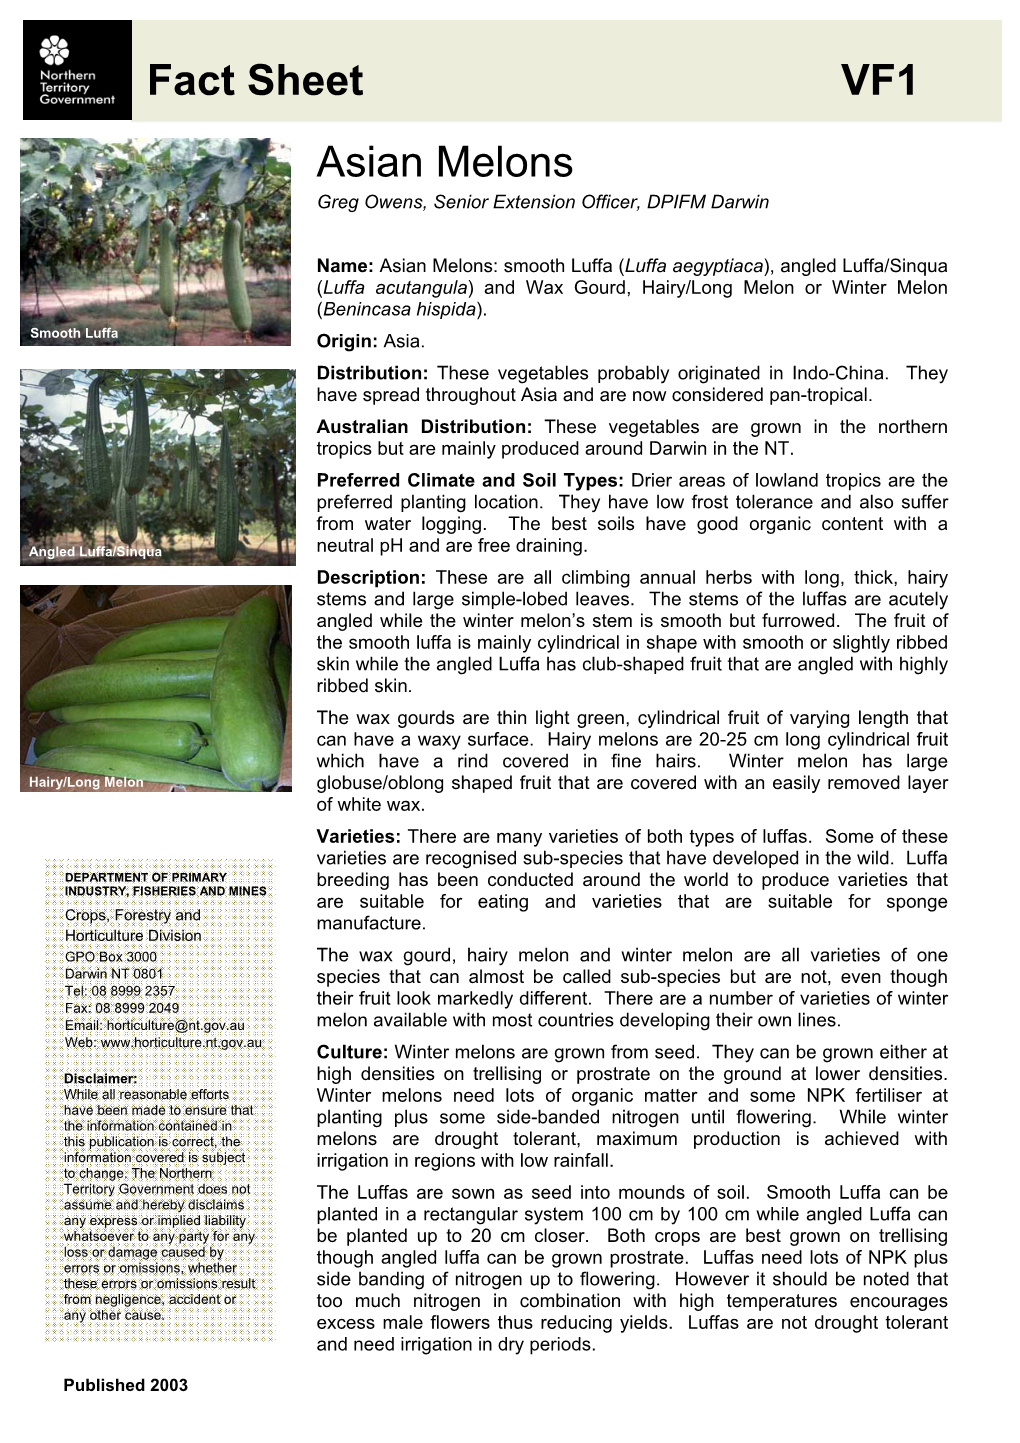 Fact Sheet VF1 Asian Melons